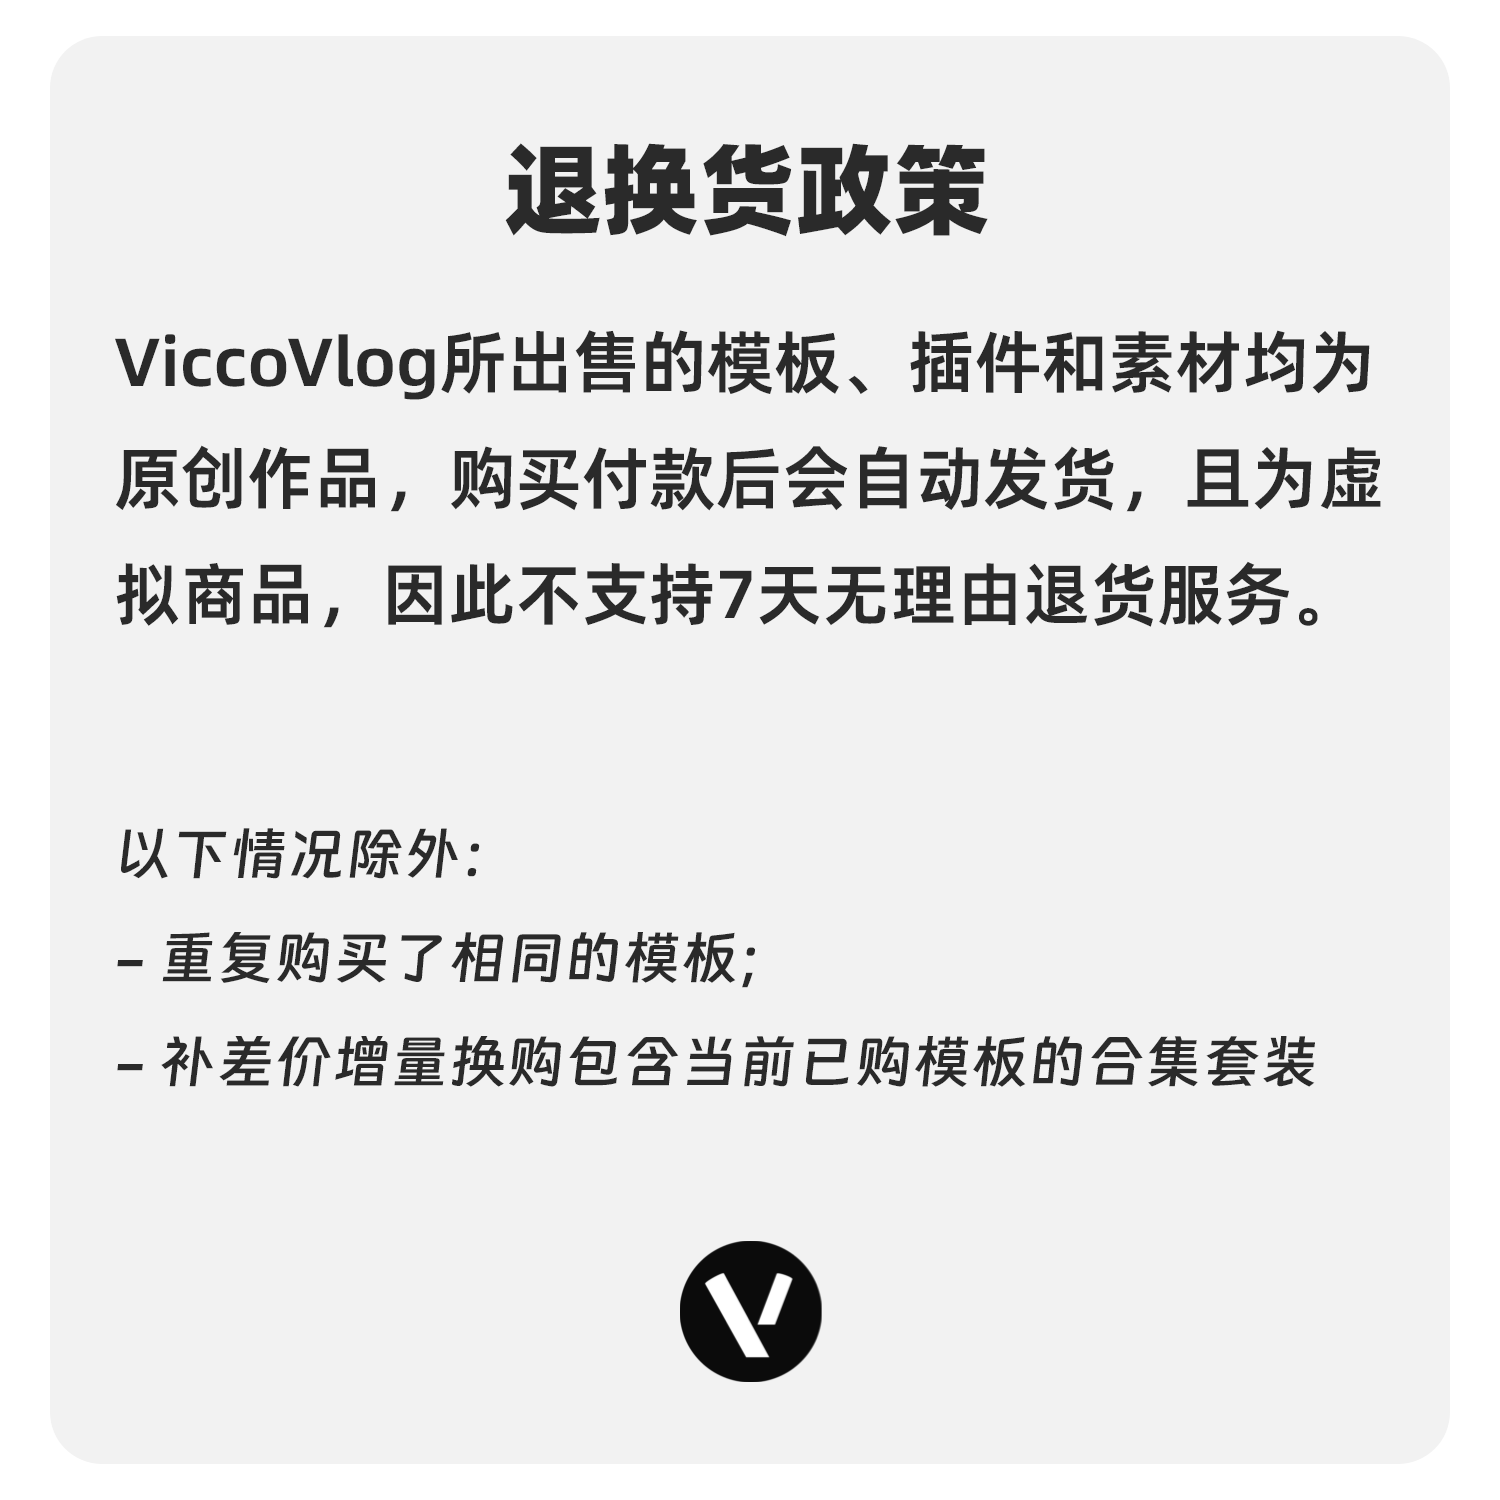 ViccoVlog 达芬奇 图像基础动画 V2 Image Effects 预设模板套件 - 图1